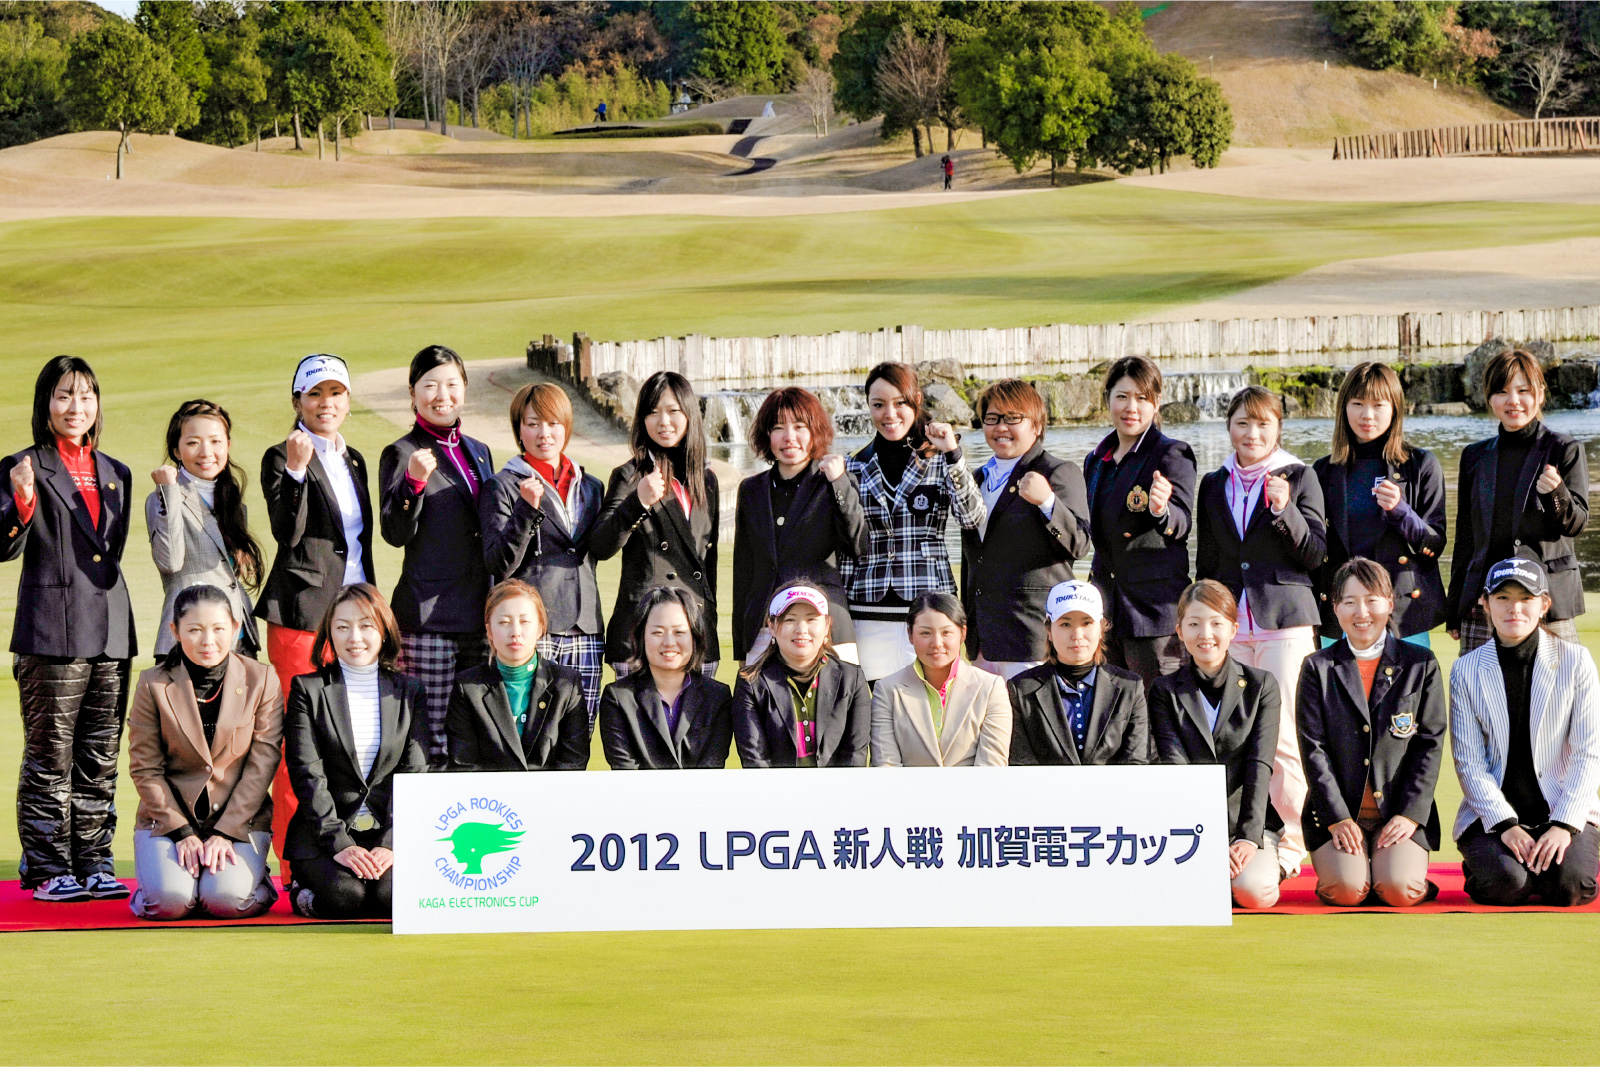 2012 LPGA 新人戦加賀電子カップ